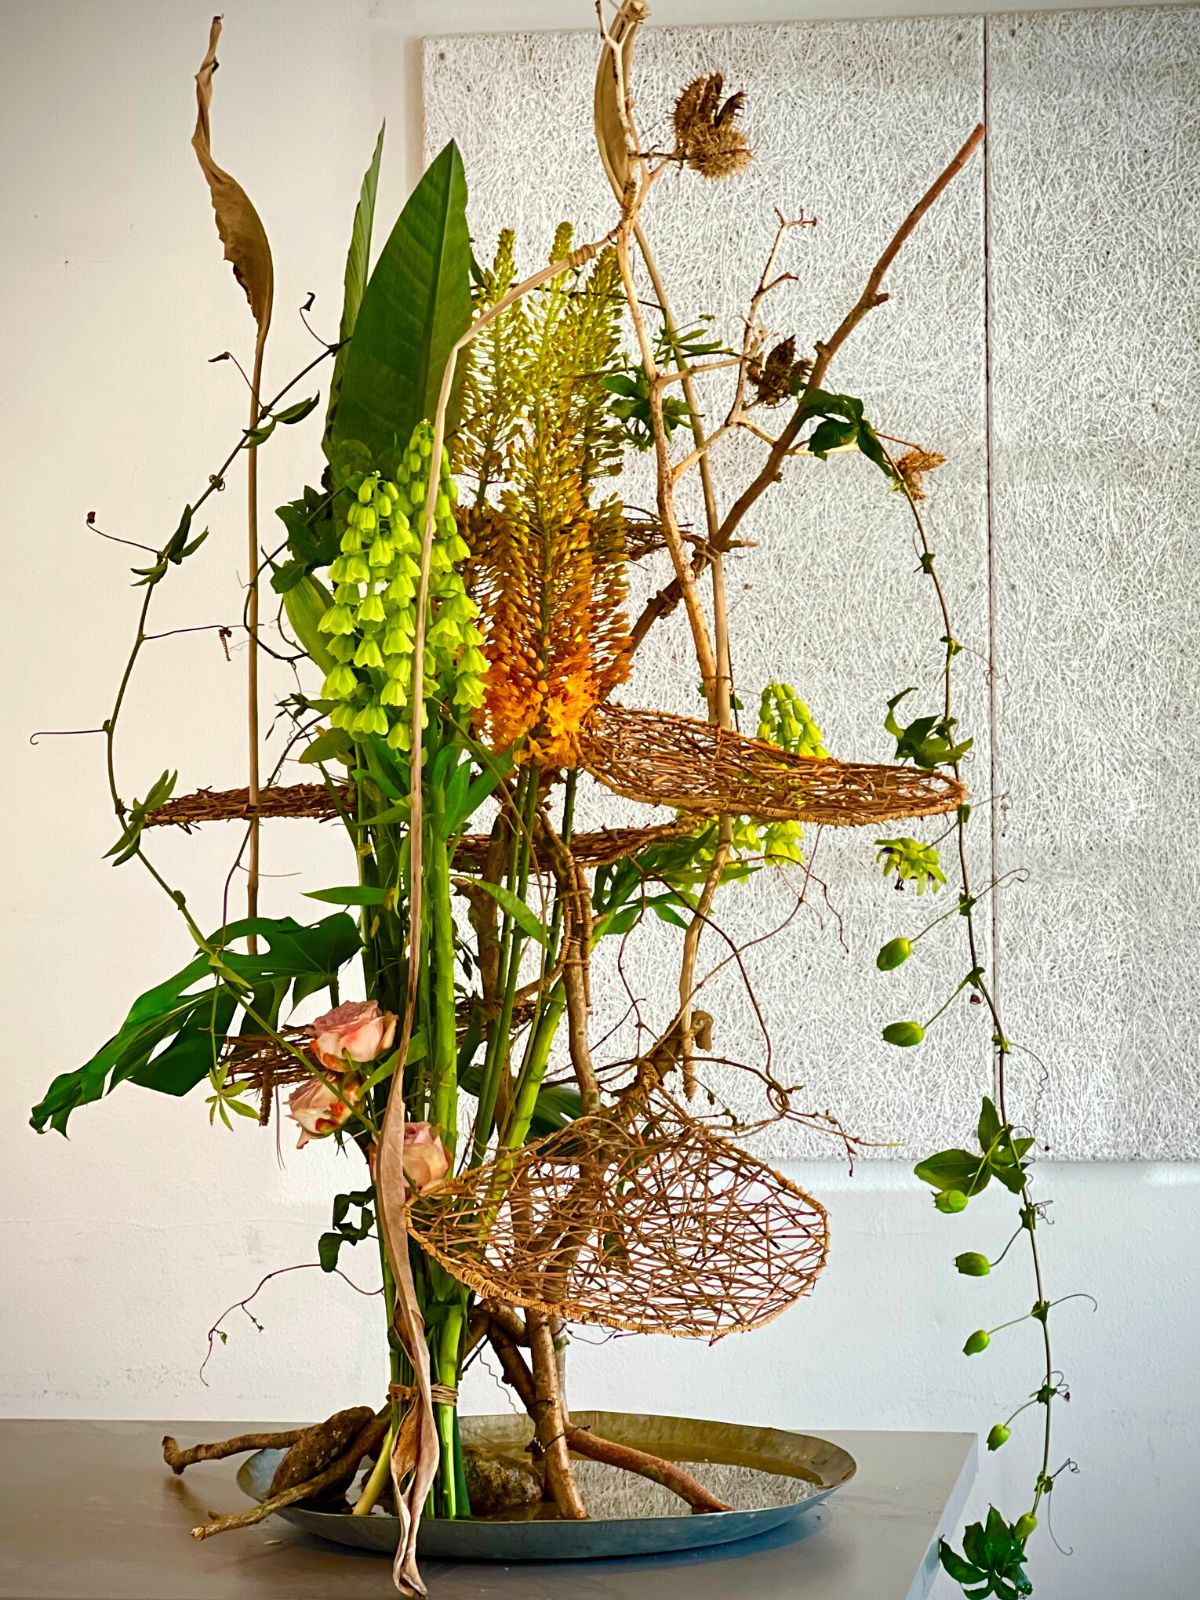 Linda Nielsen Presents Organic Design by Gregor Lersch on Thursd